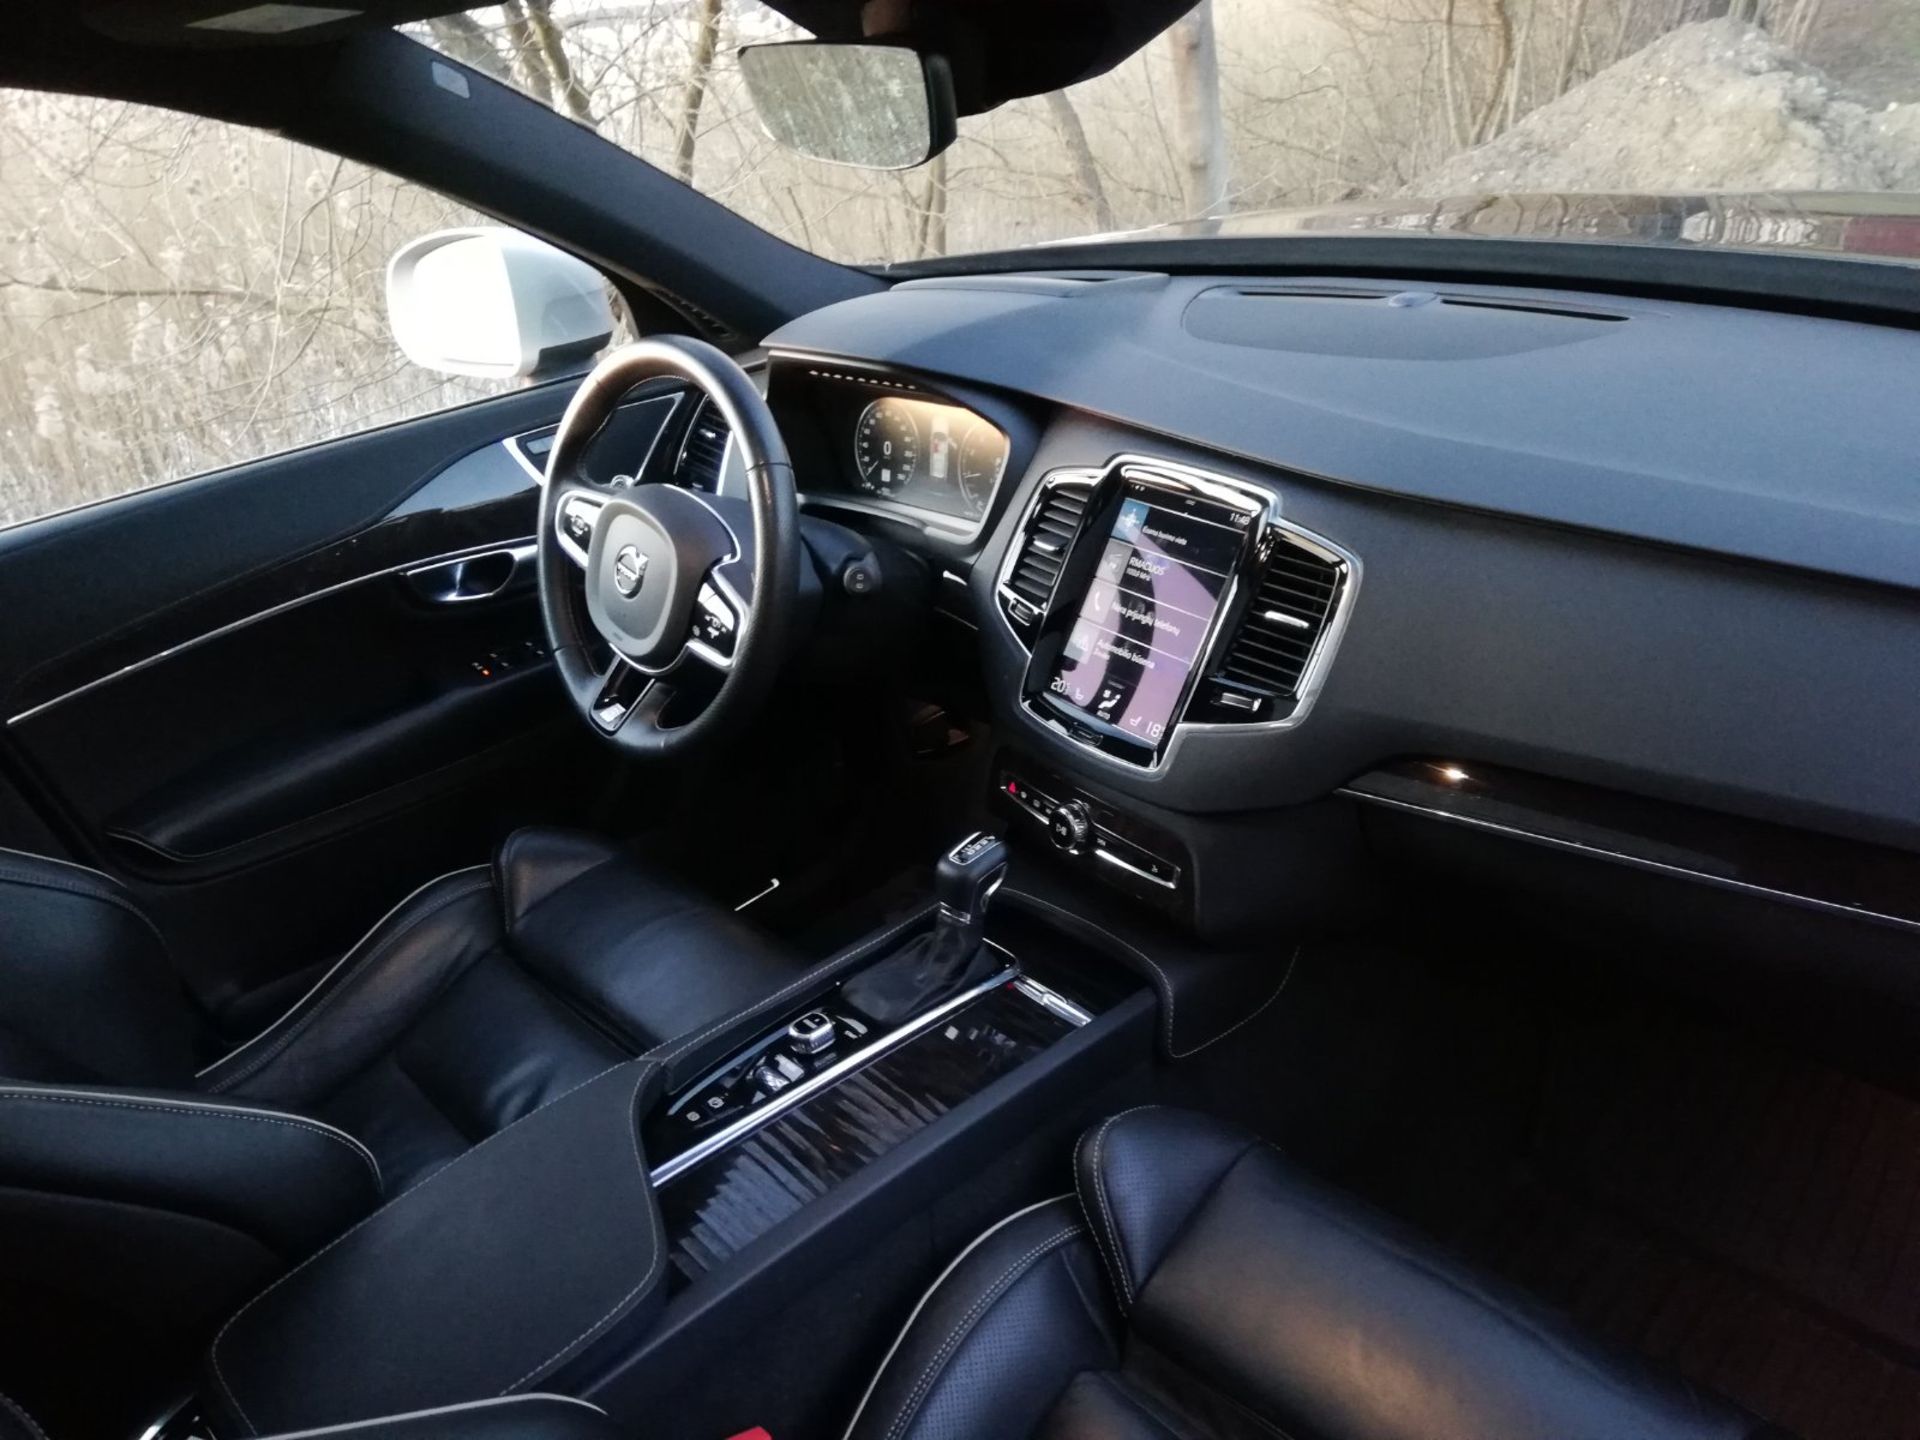 2017 VOLVO XC90 T6 AWD LHD 7 SEAT R-DESIGN 2.0L PETROL AUTOMATIC, 45,000 KM, DRIVES LIKE NEW 7 - Image 18 of 20